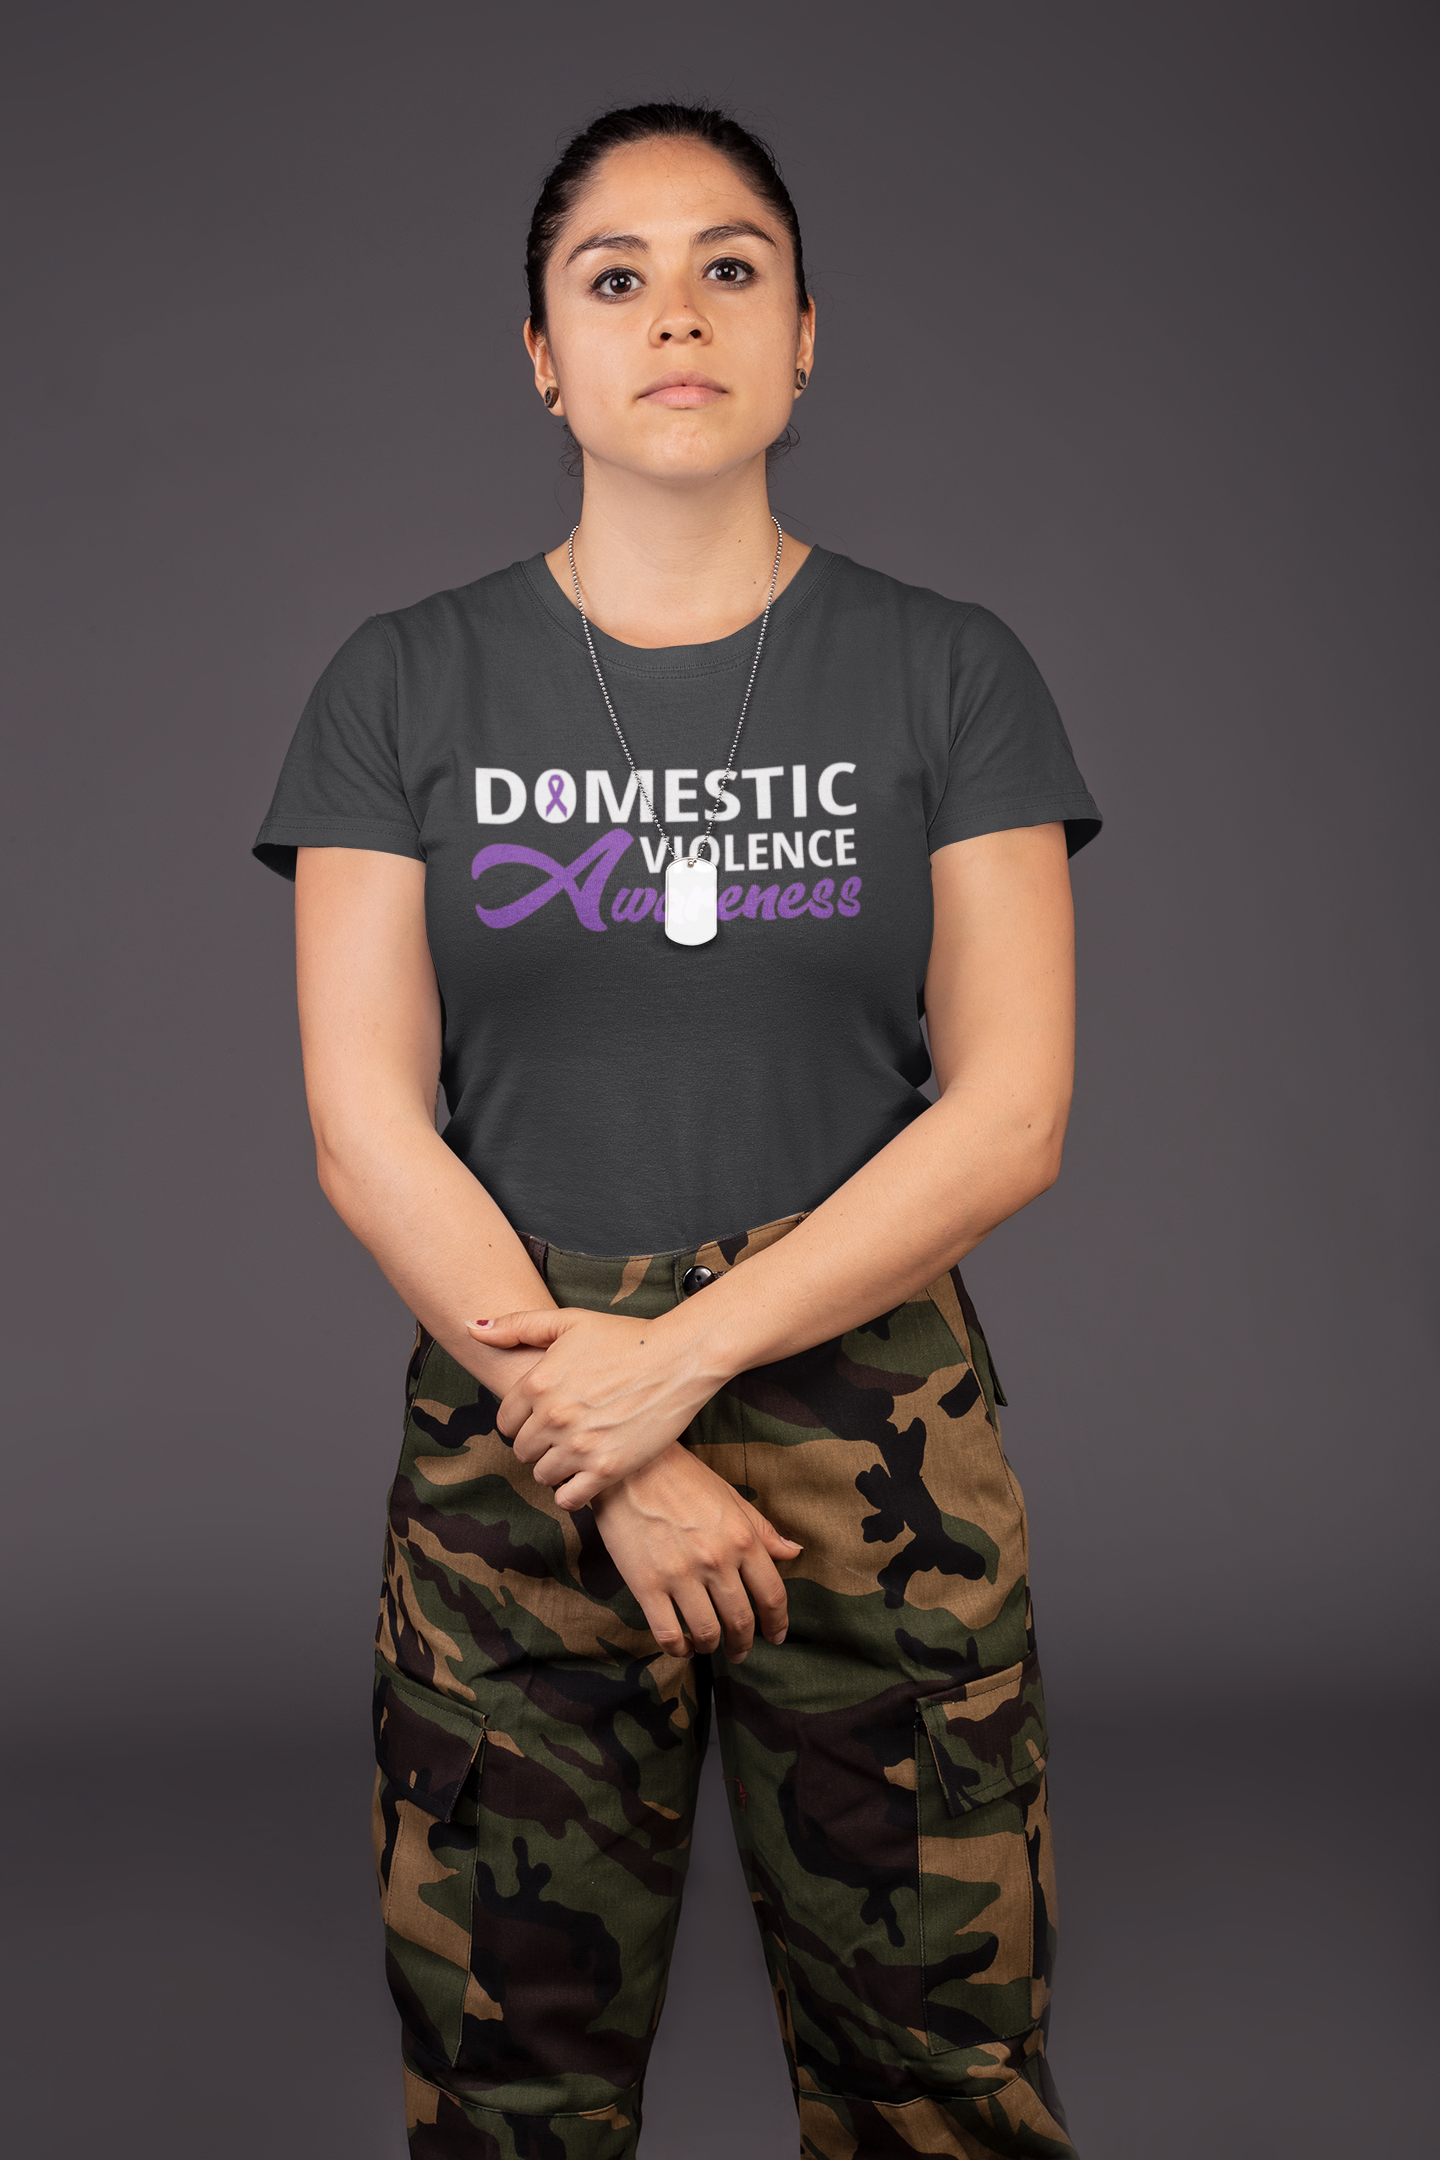 Domestic Violence T-shirt